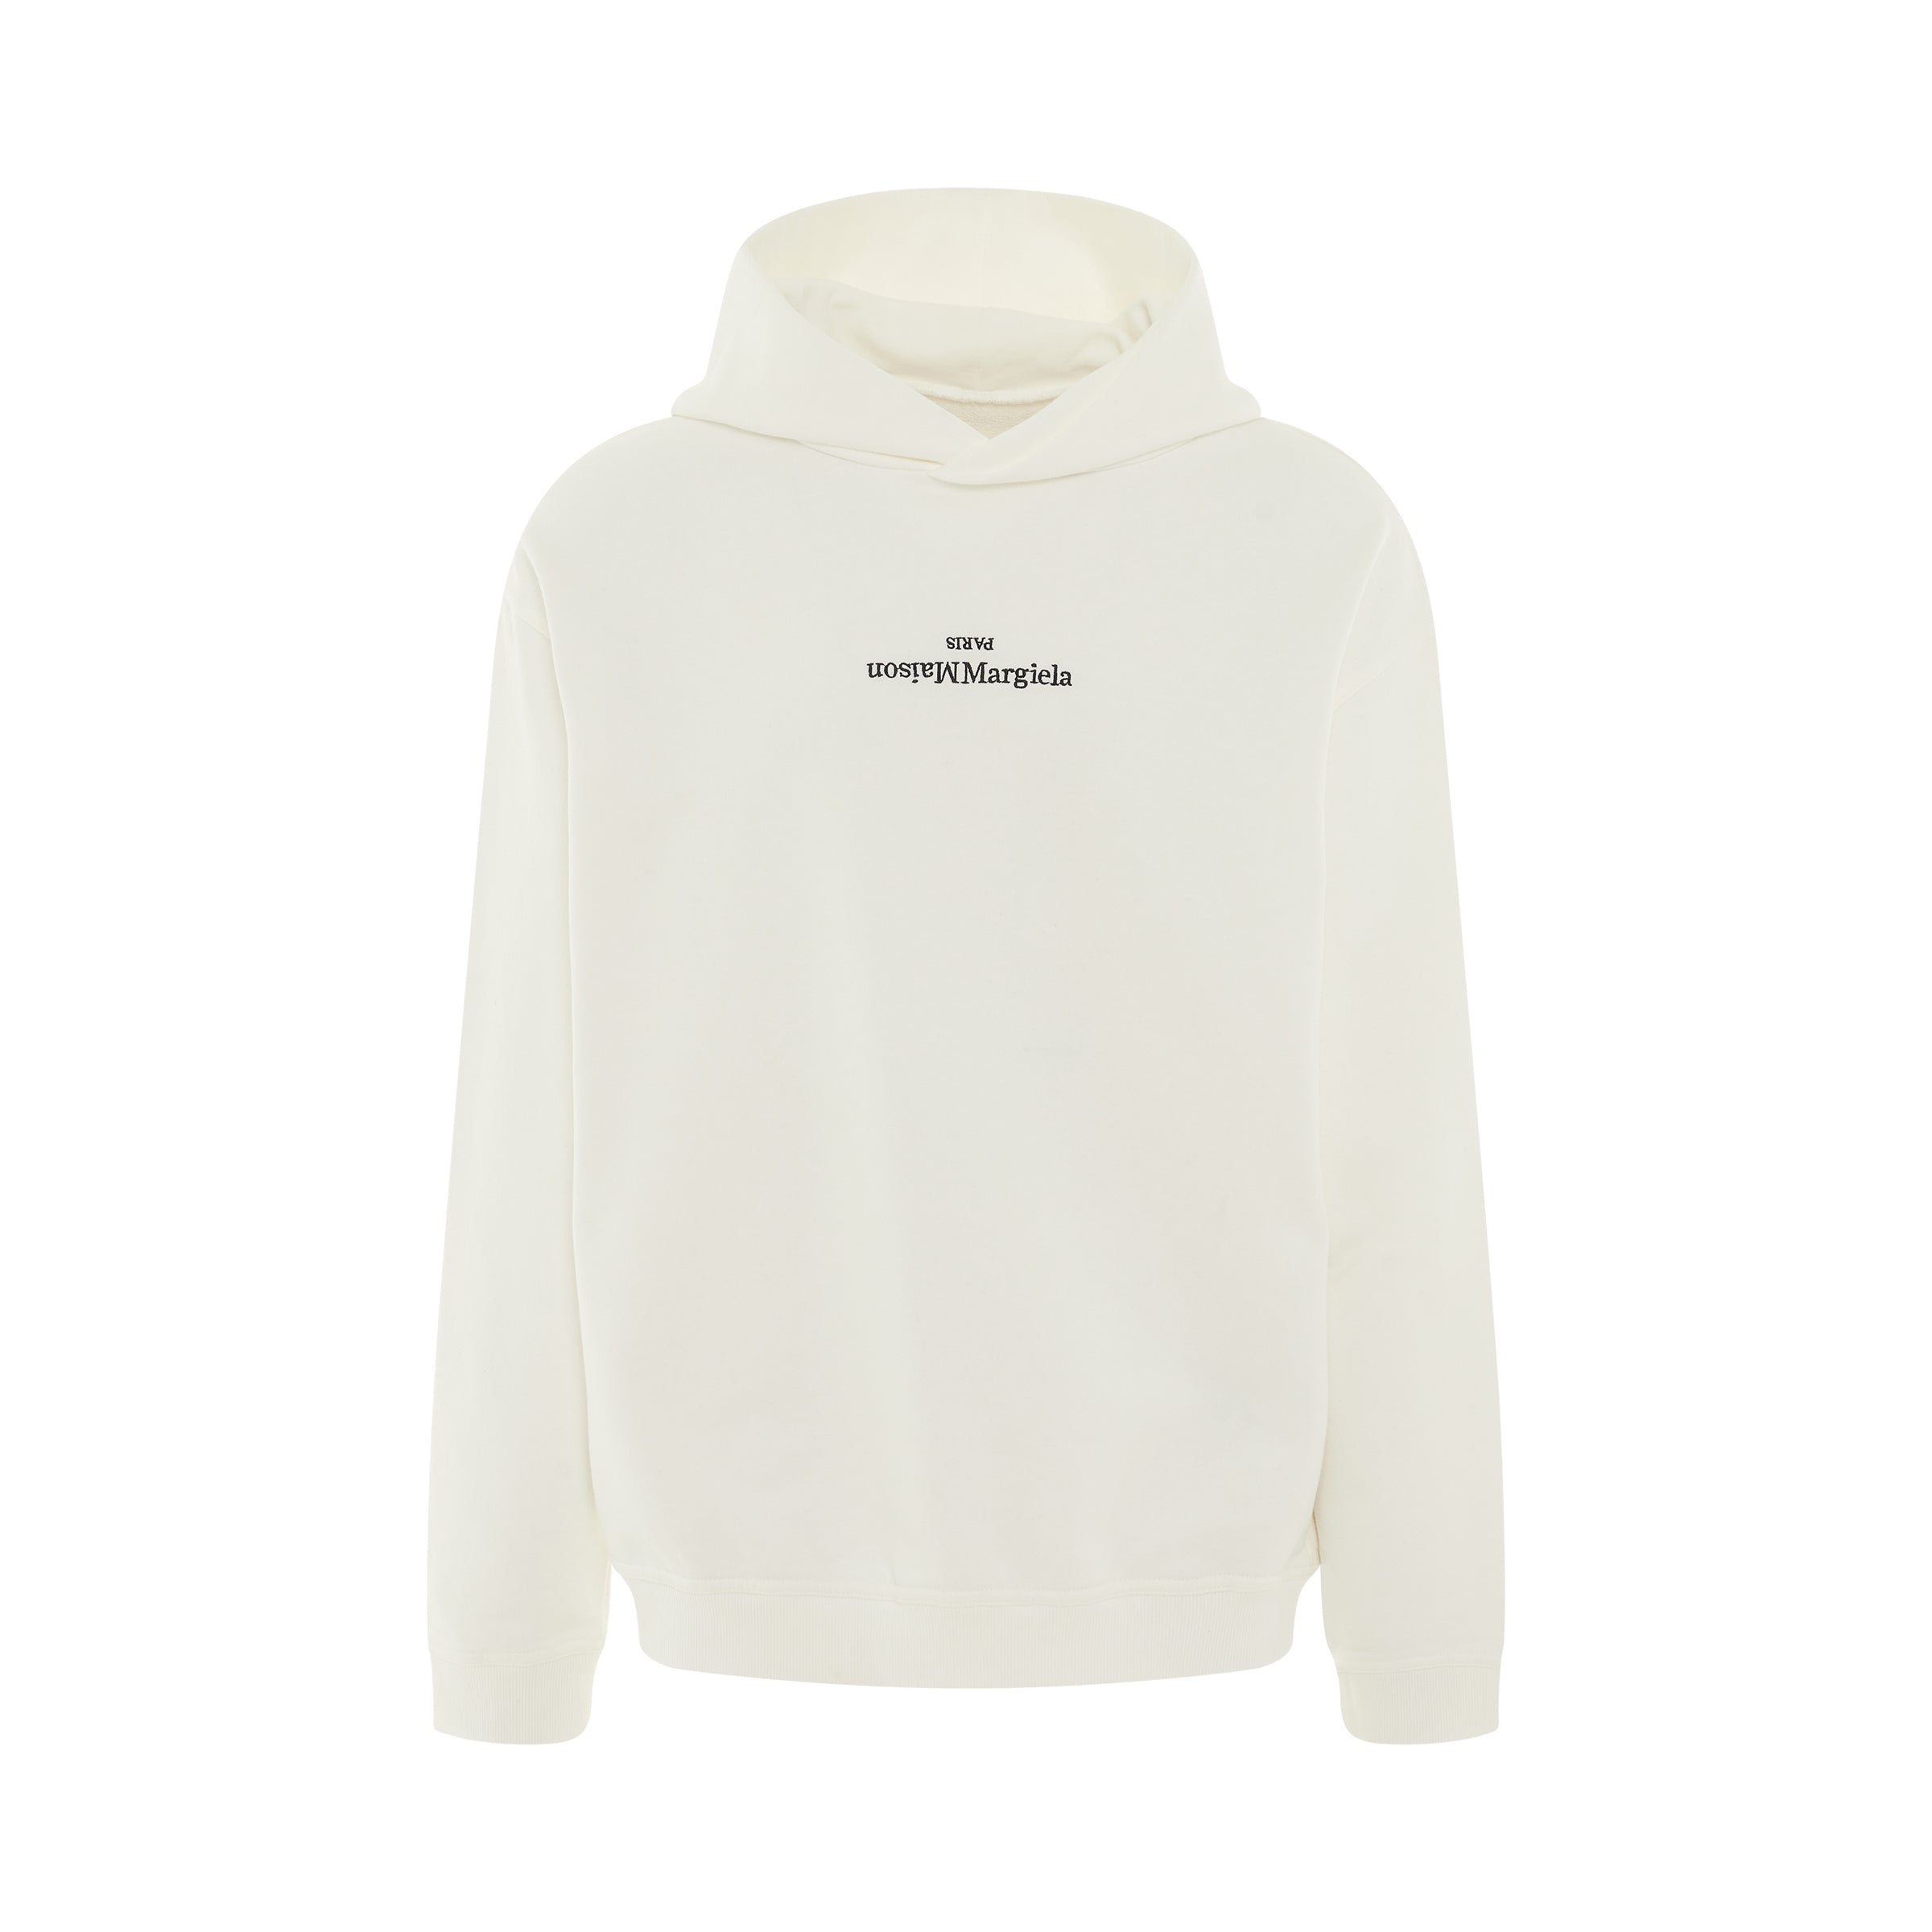 maison margiela upside down logo hoodie in white regular price $ 1150 ...